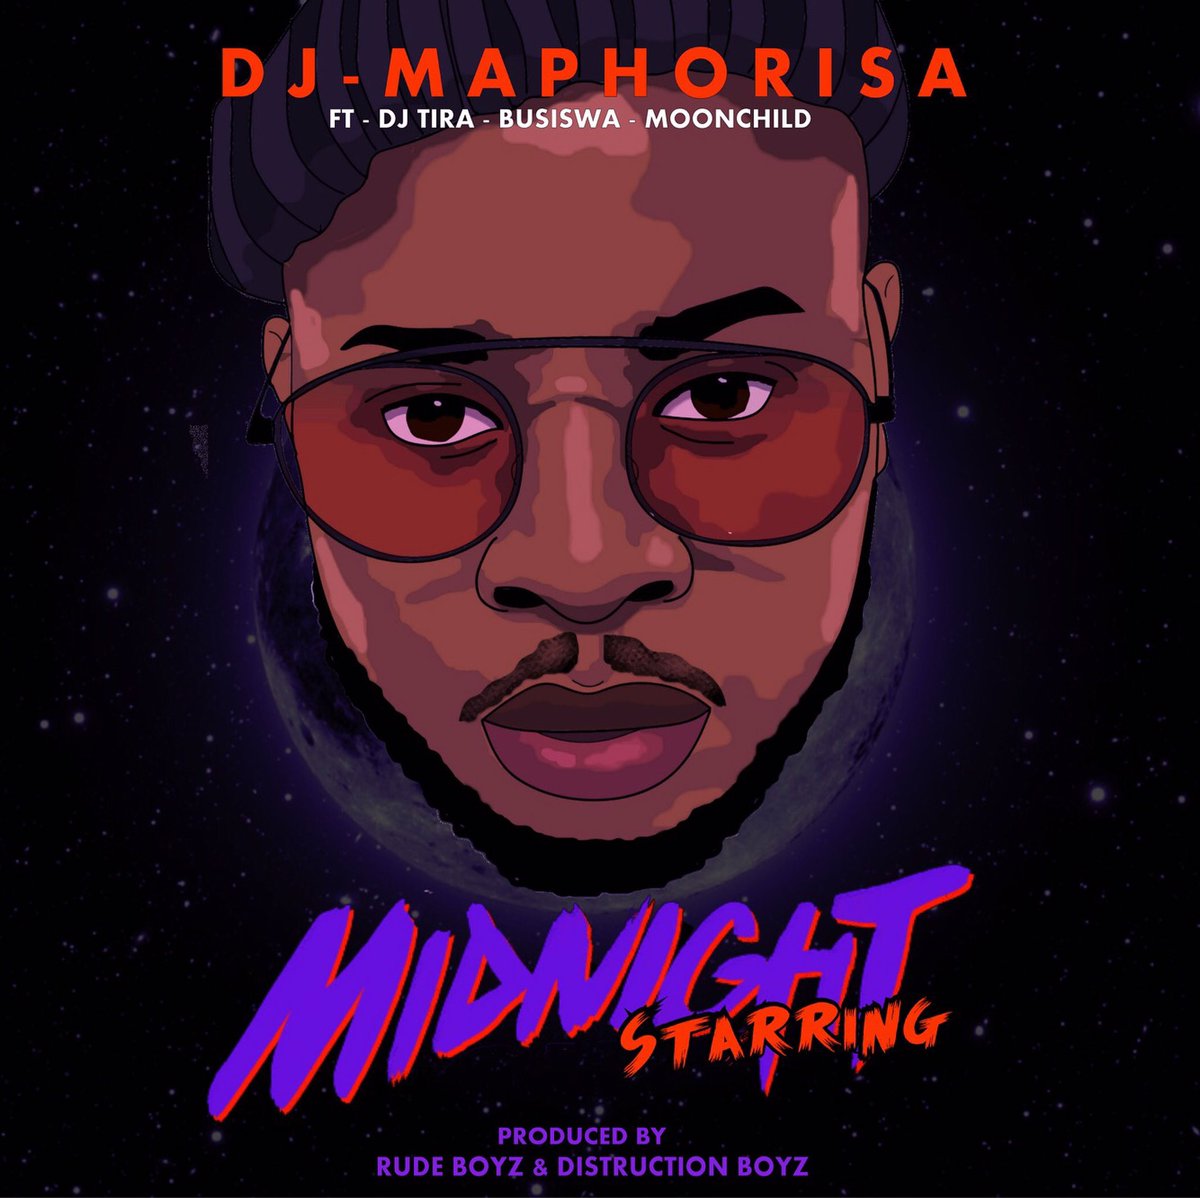 Lyrics For Midnight Starring By DJ Maphorisa Ft DJ Tira, Busiswa and Moonchild